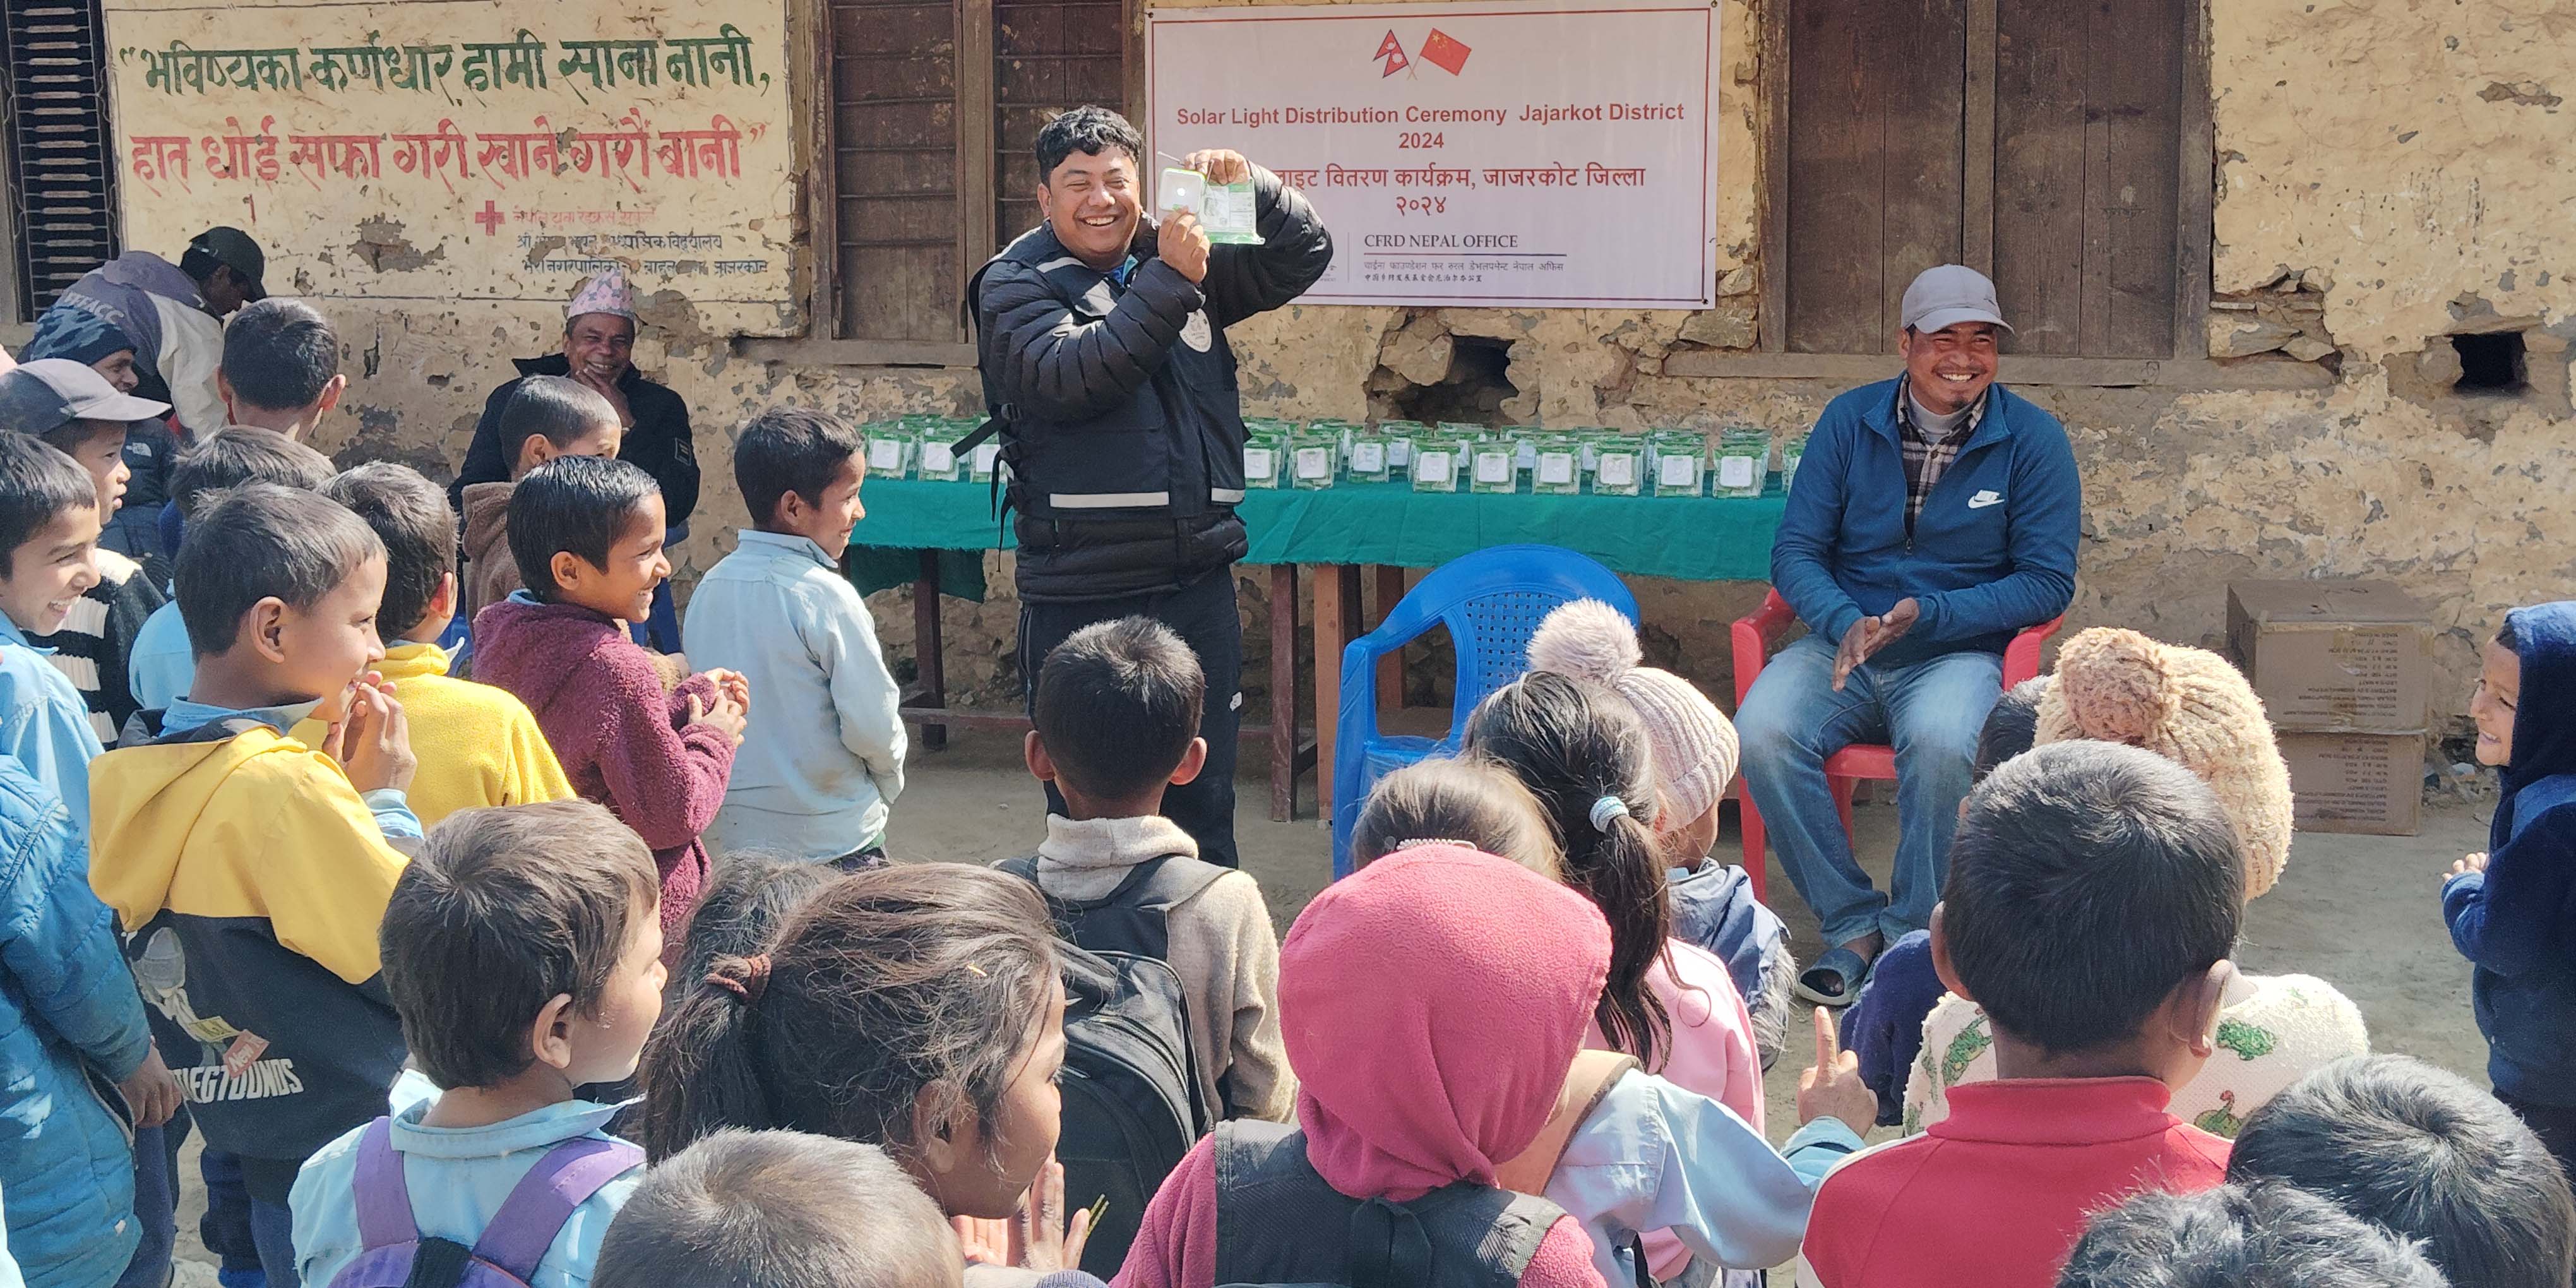 China Foundation distributes solar lights to quake-affected children in Jajarkot